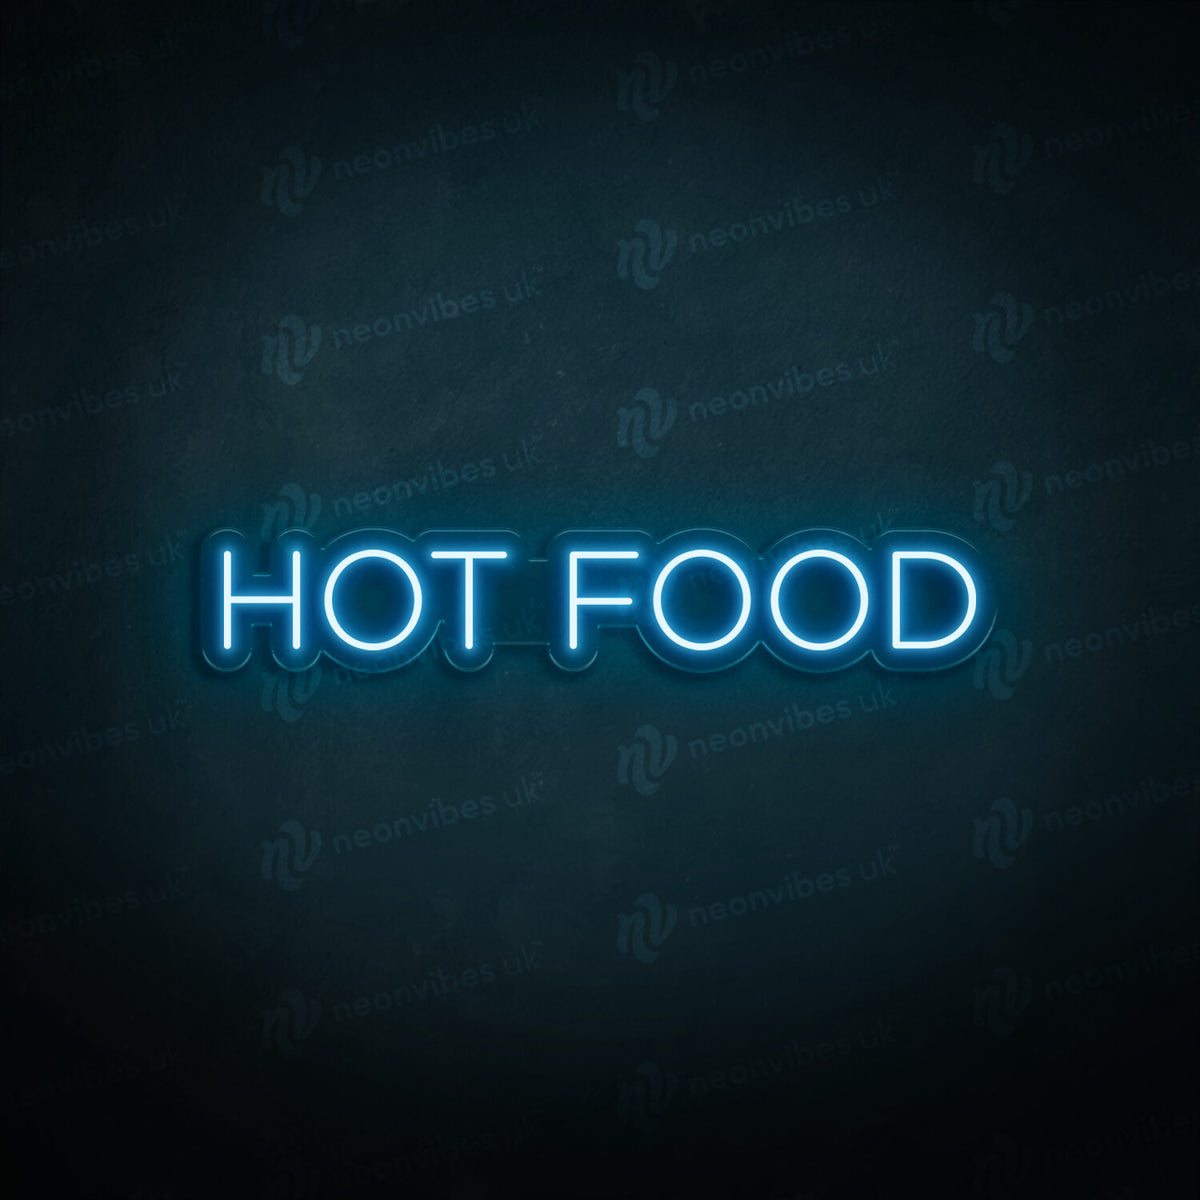 Hot Food neon sign